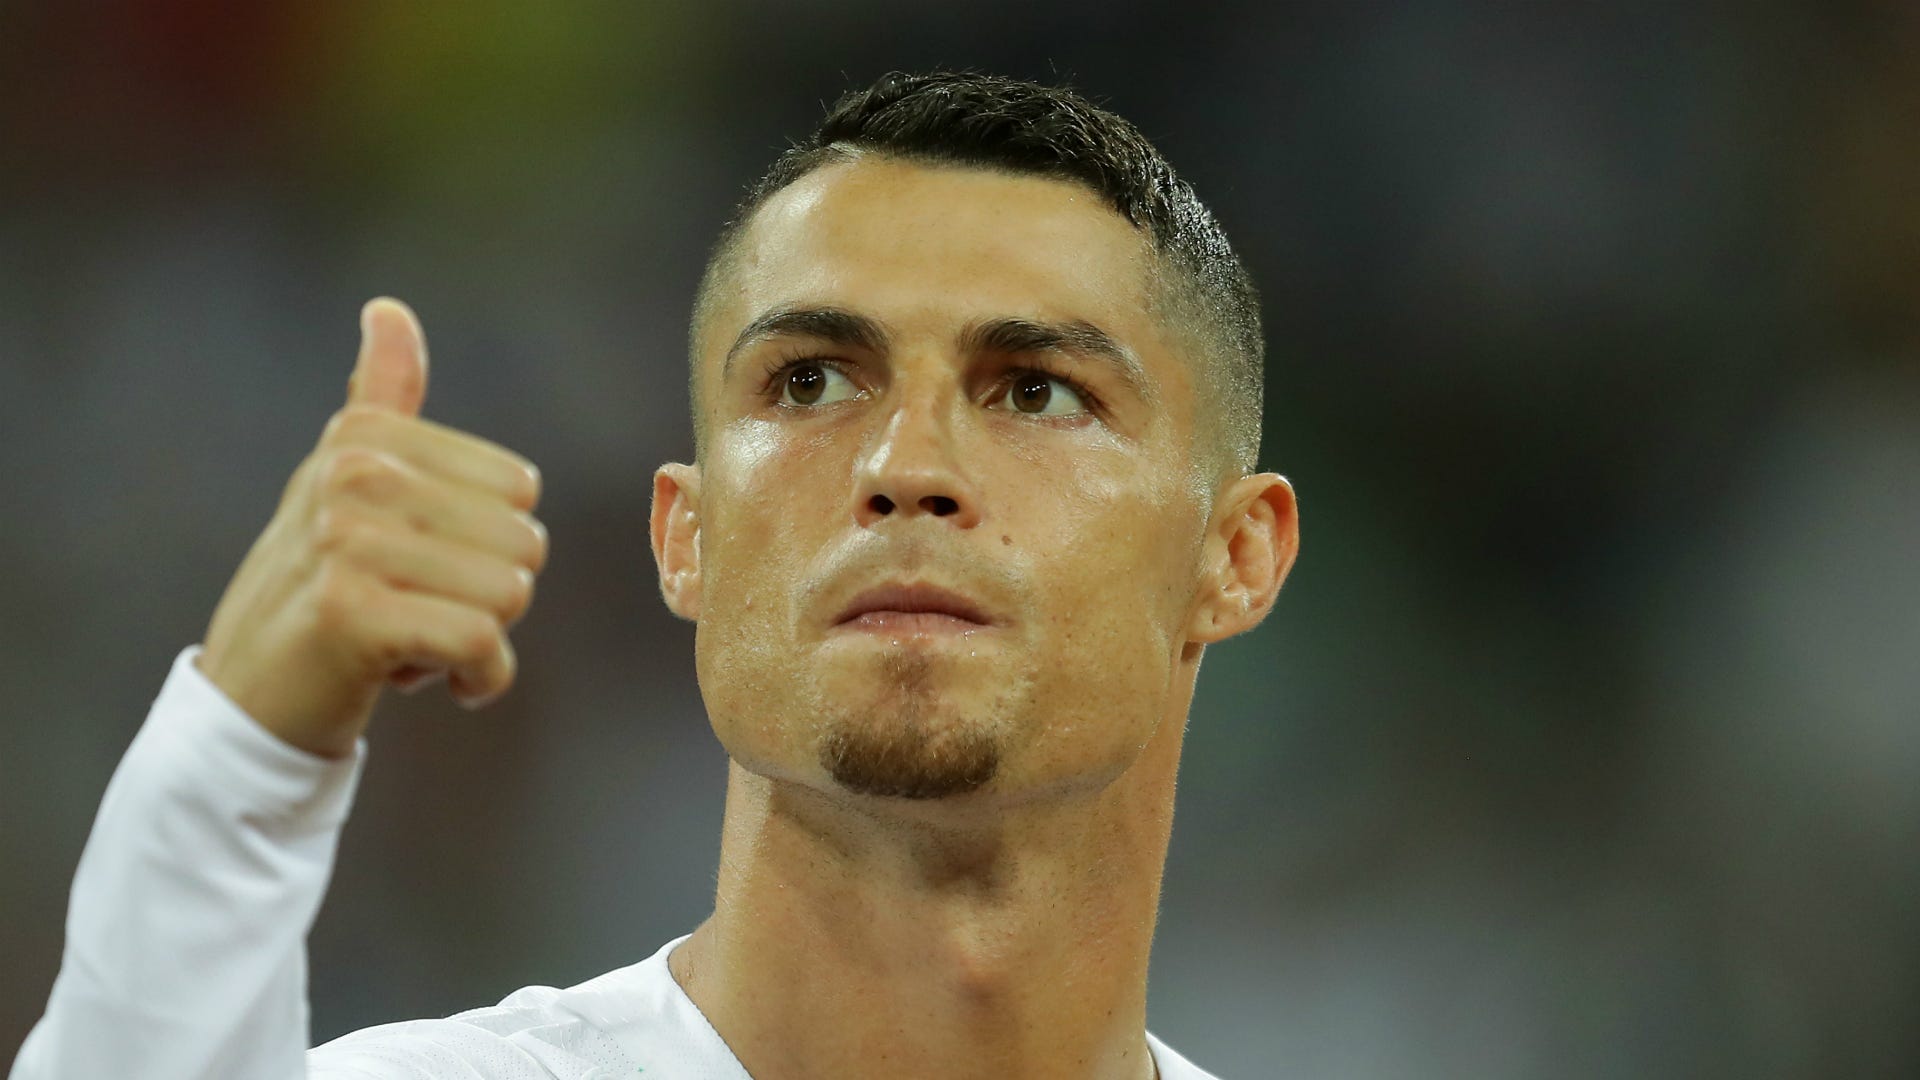 Ronaldo's daft 'triangle fringe' set for World Cup return - Daily Star